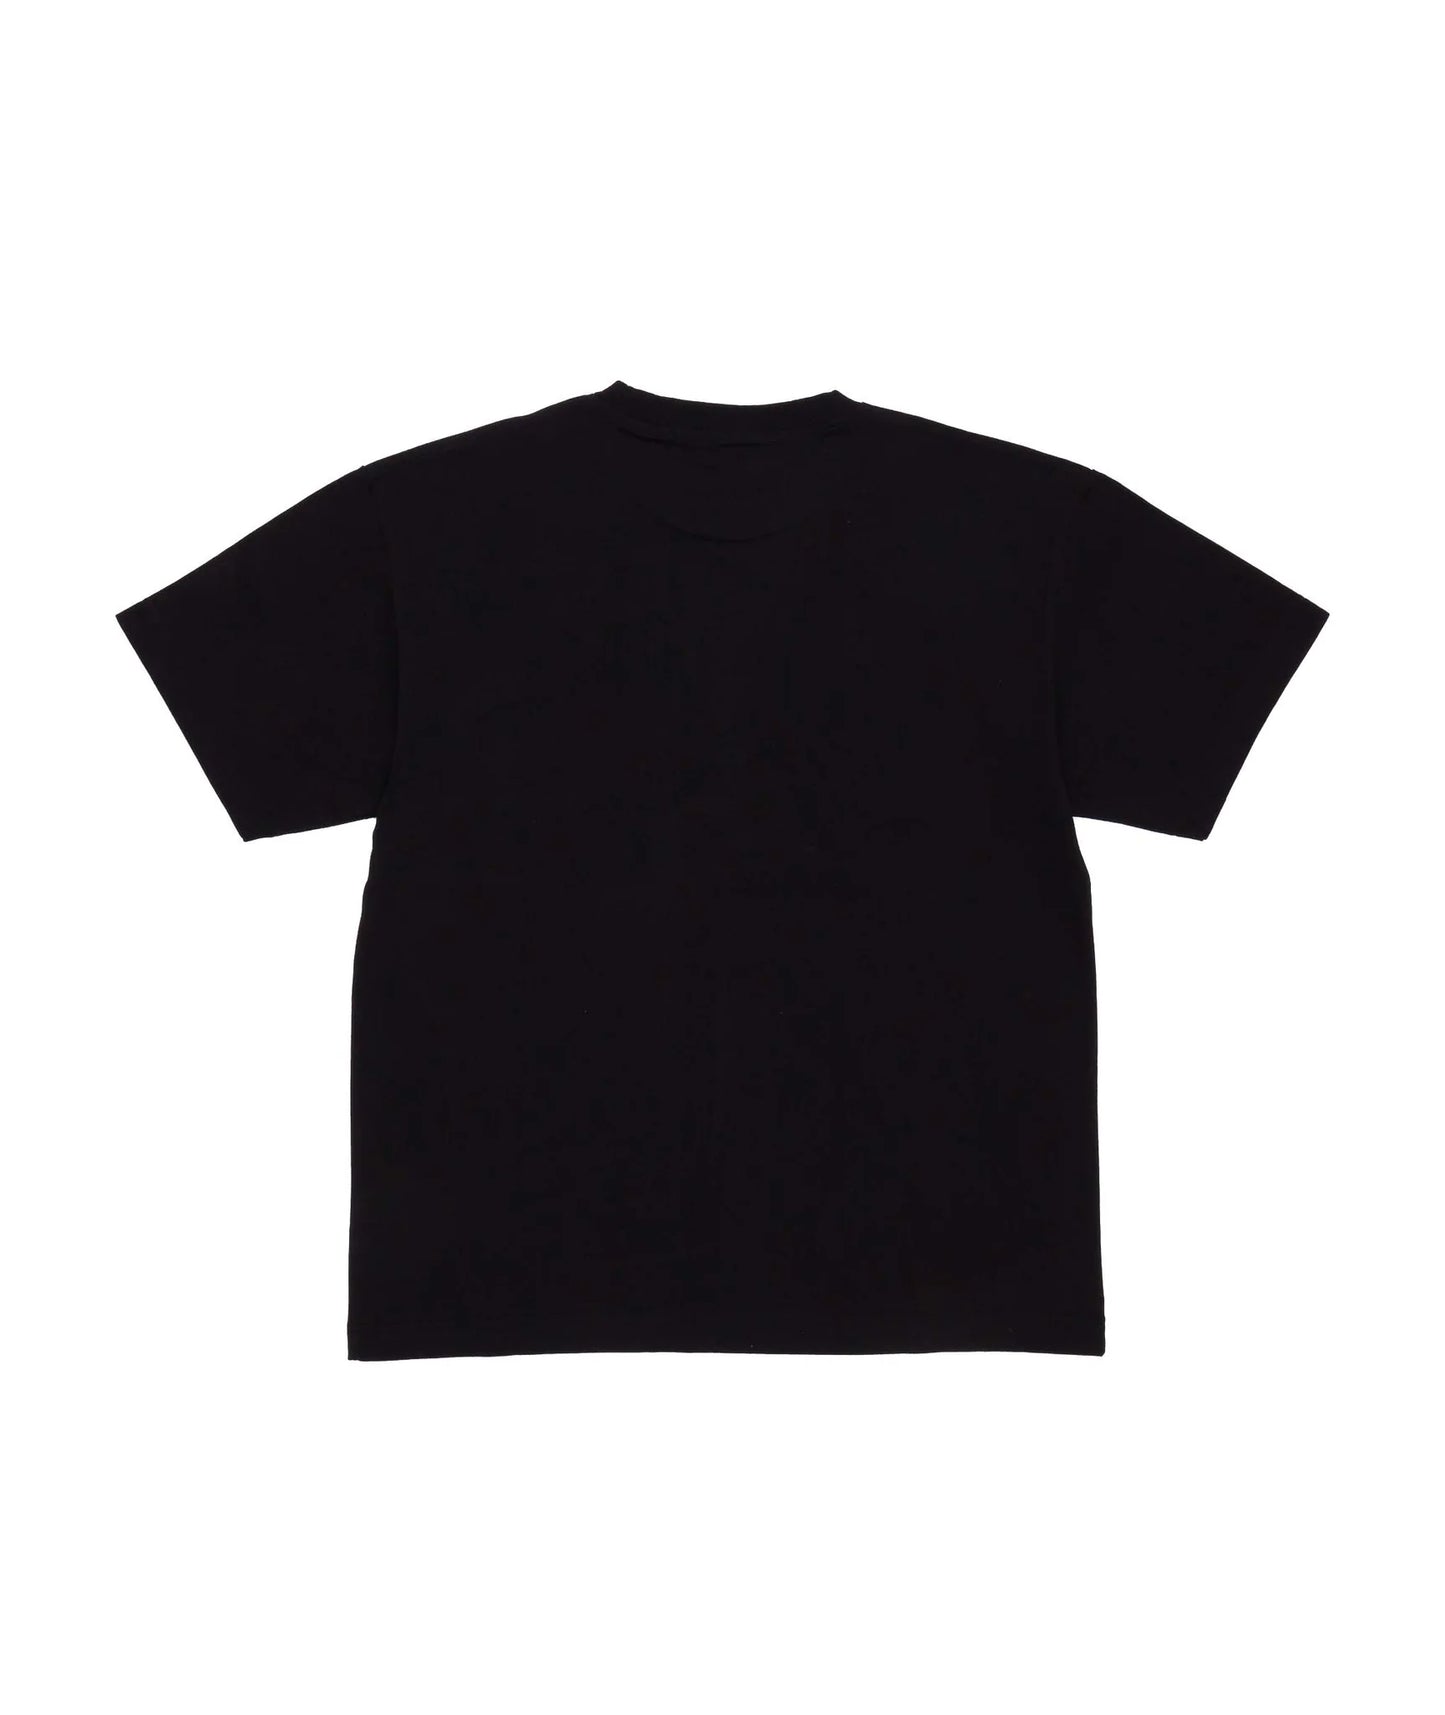 Dancer OG Logo T-Shirt Black